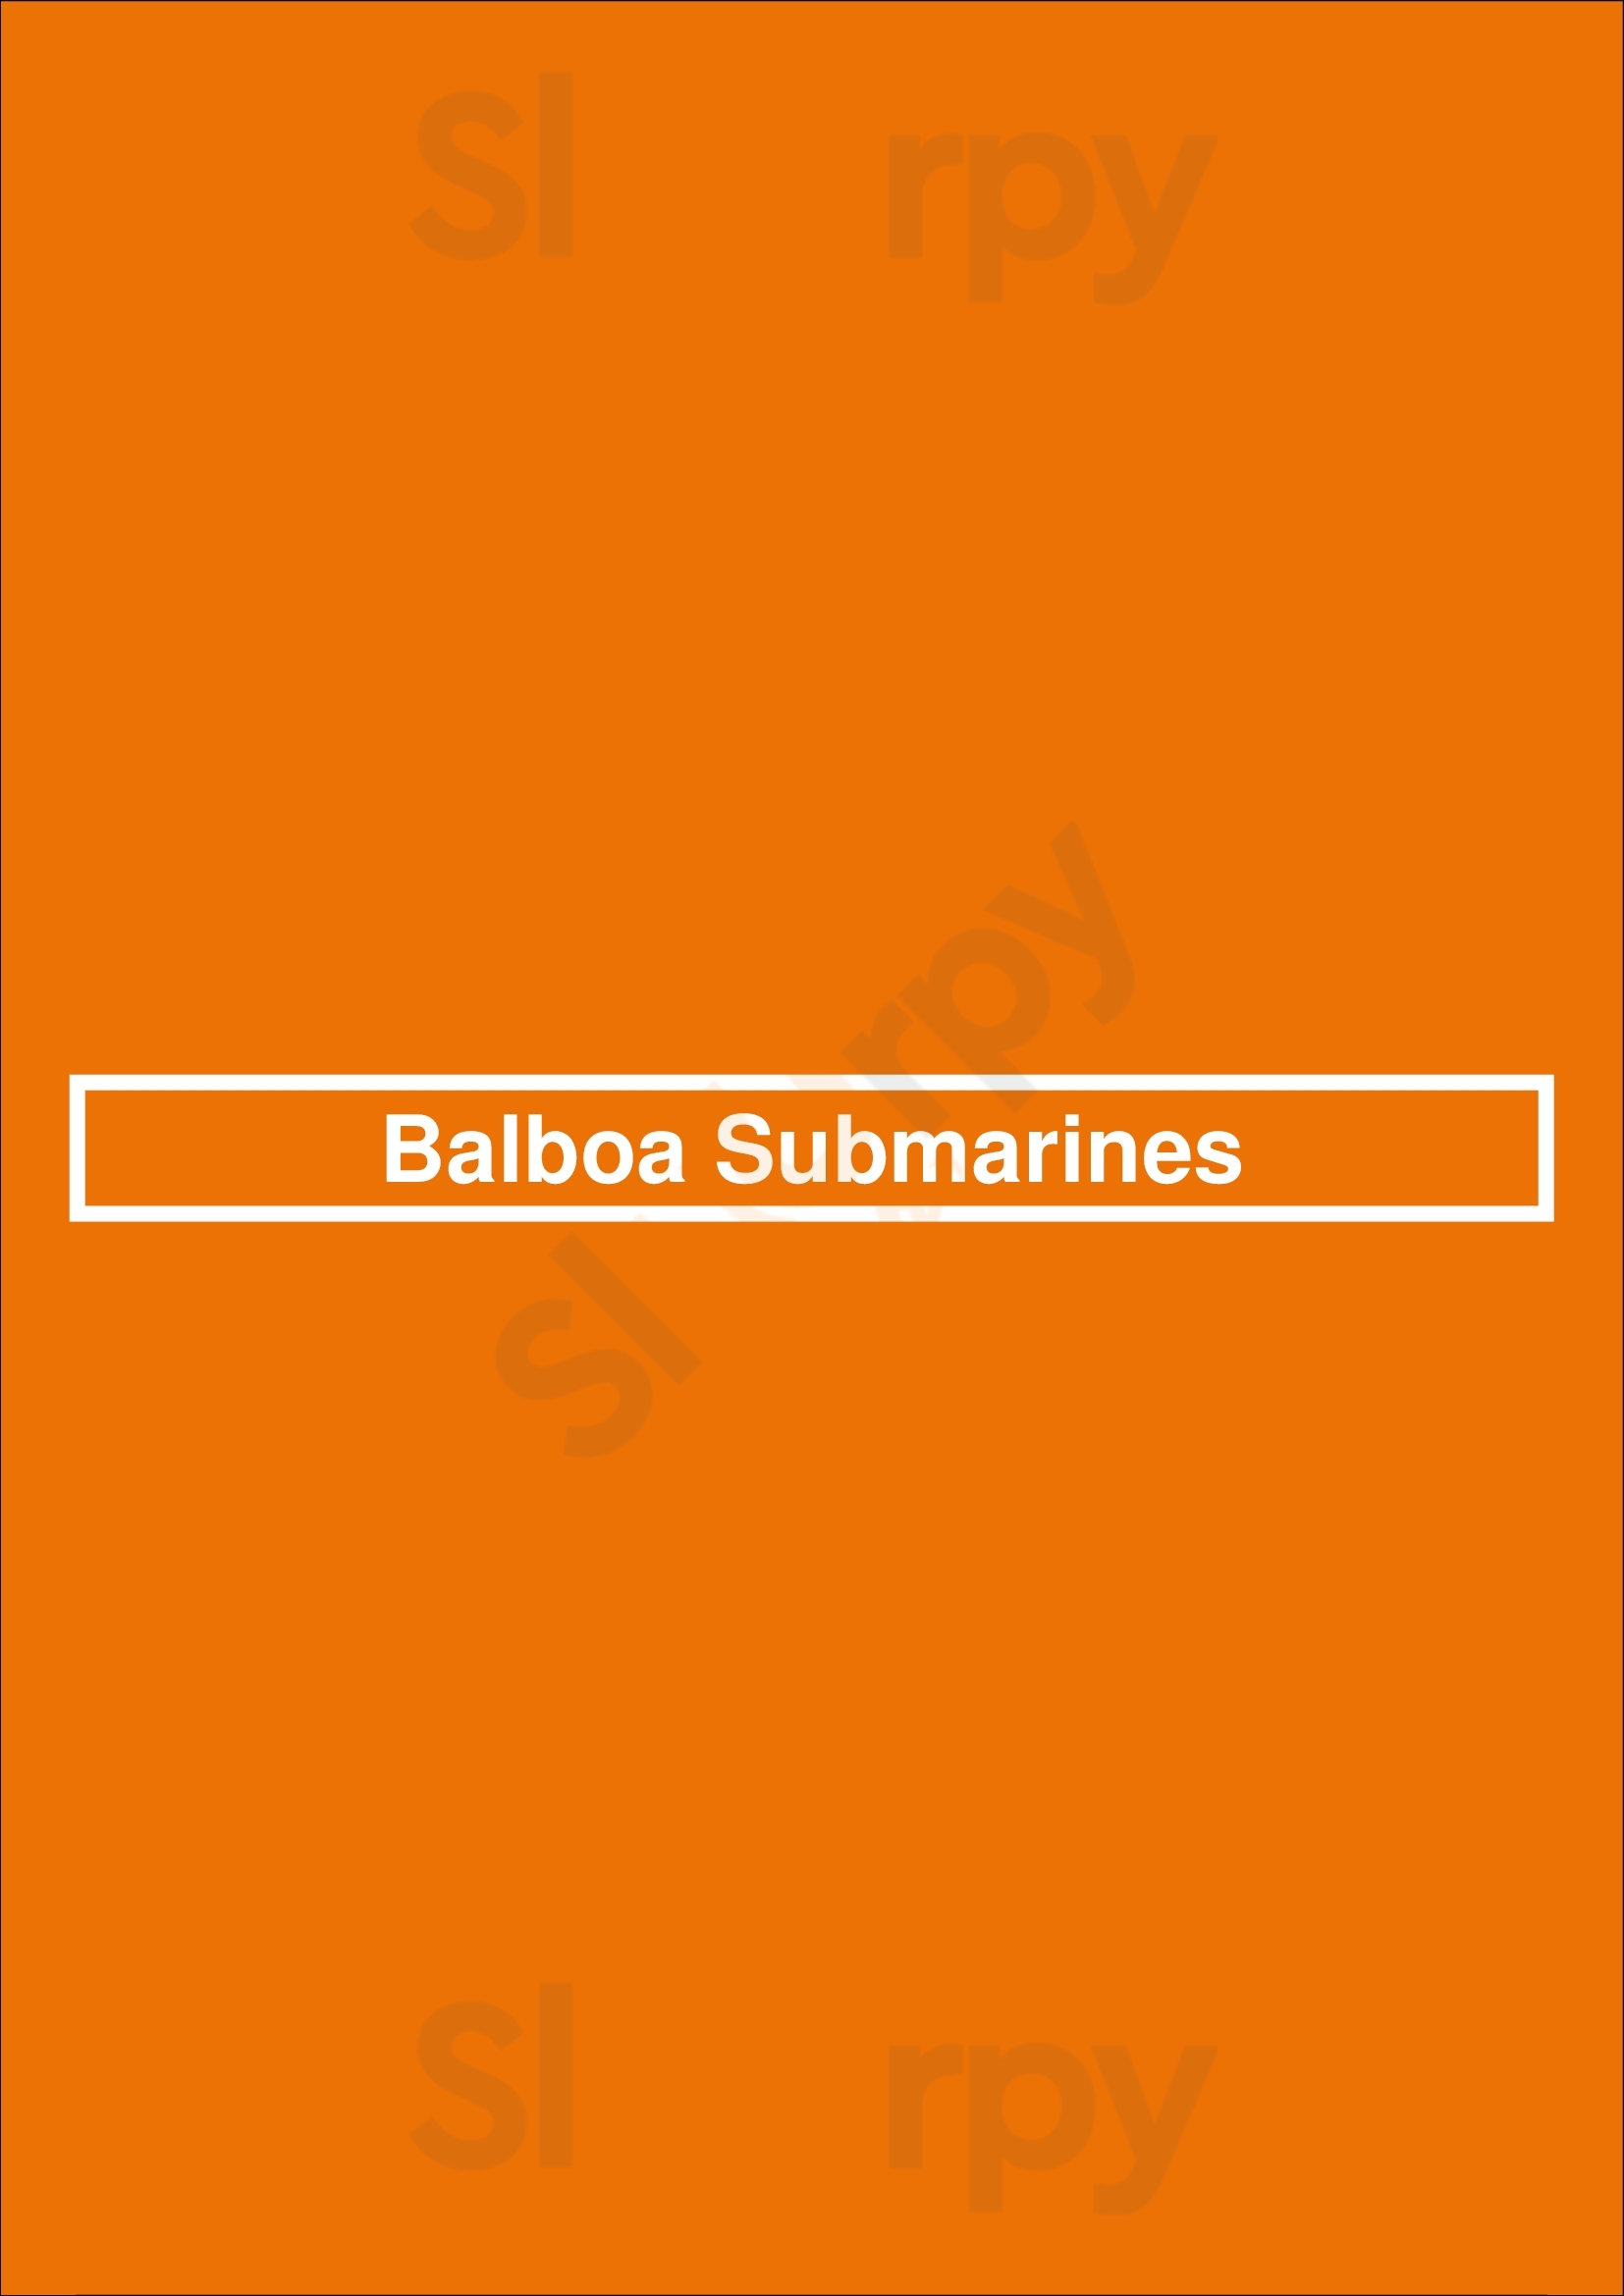 Balboa Submarines Los Angeles Menu - 1